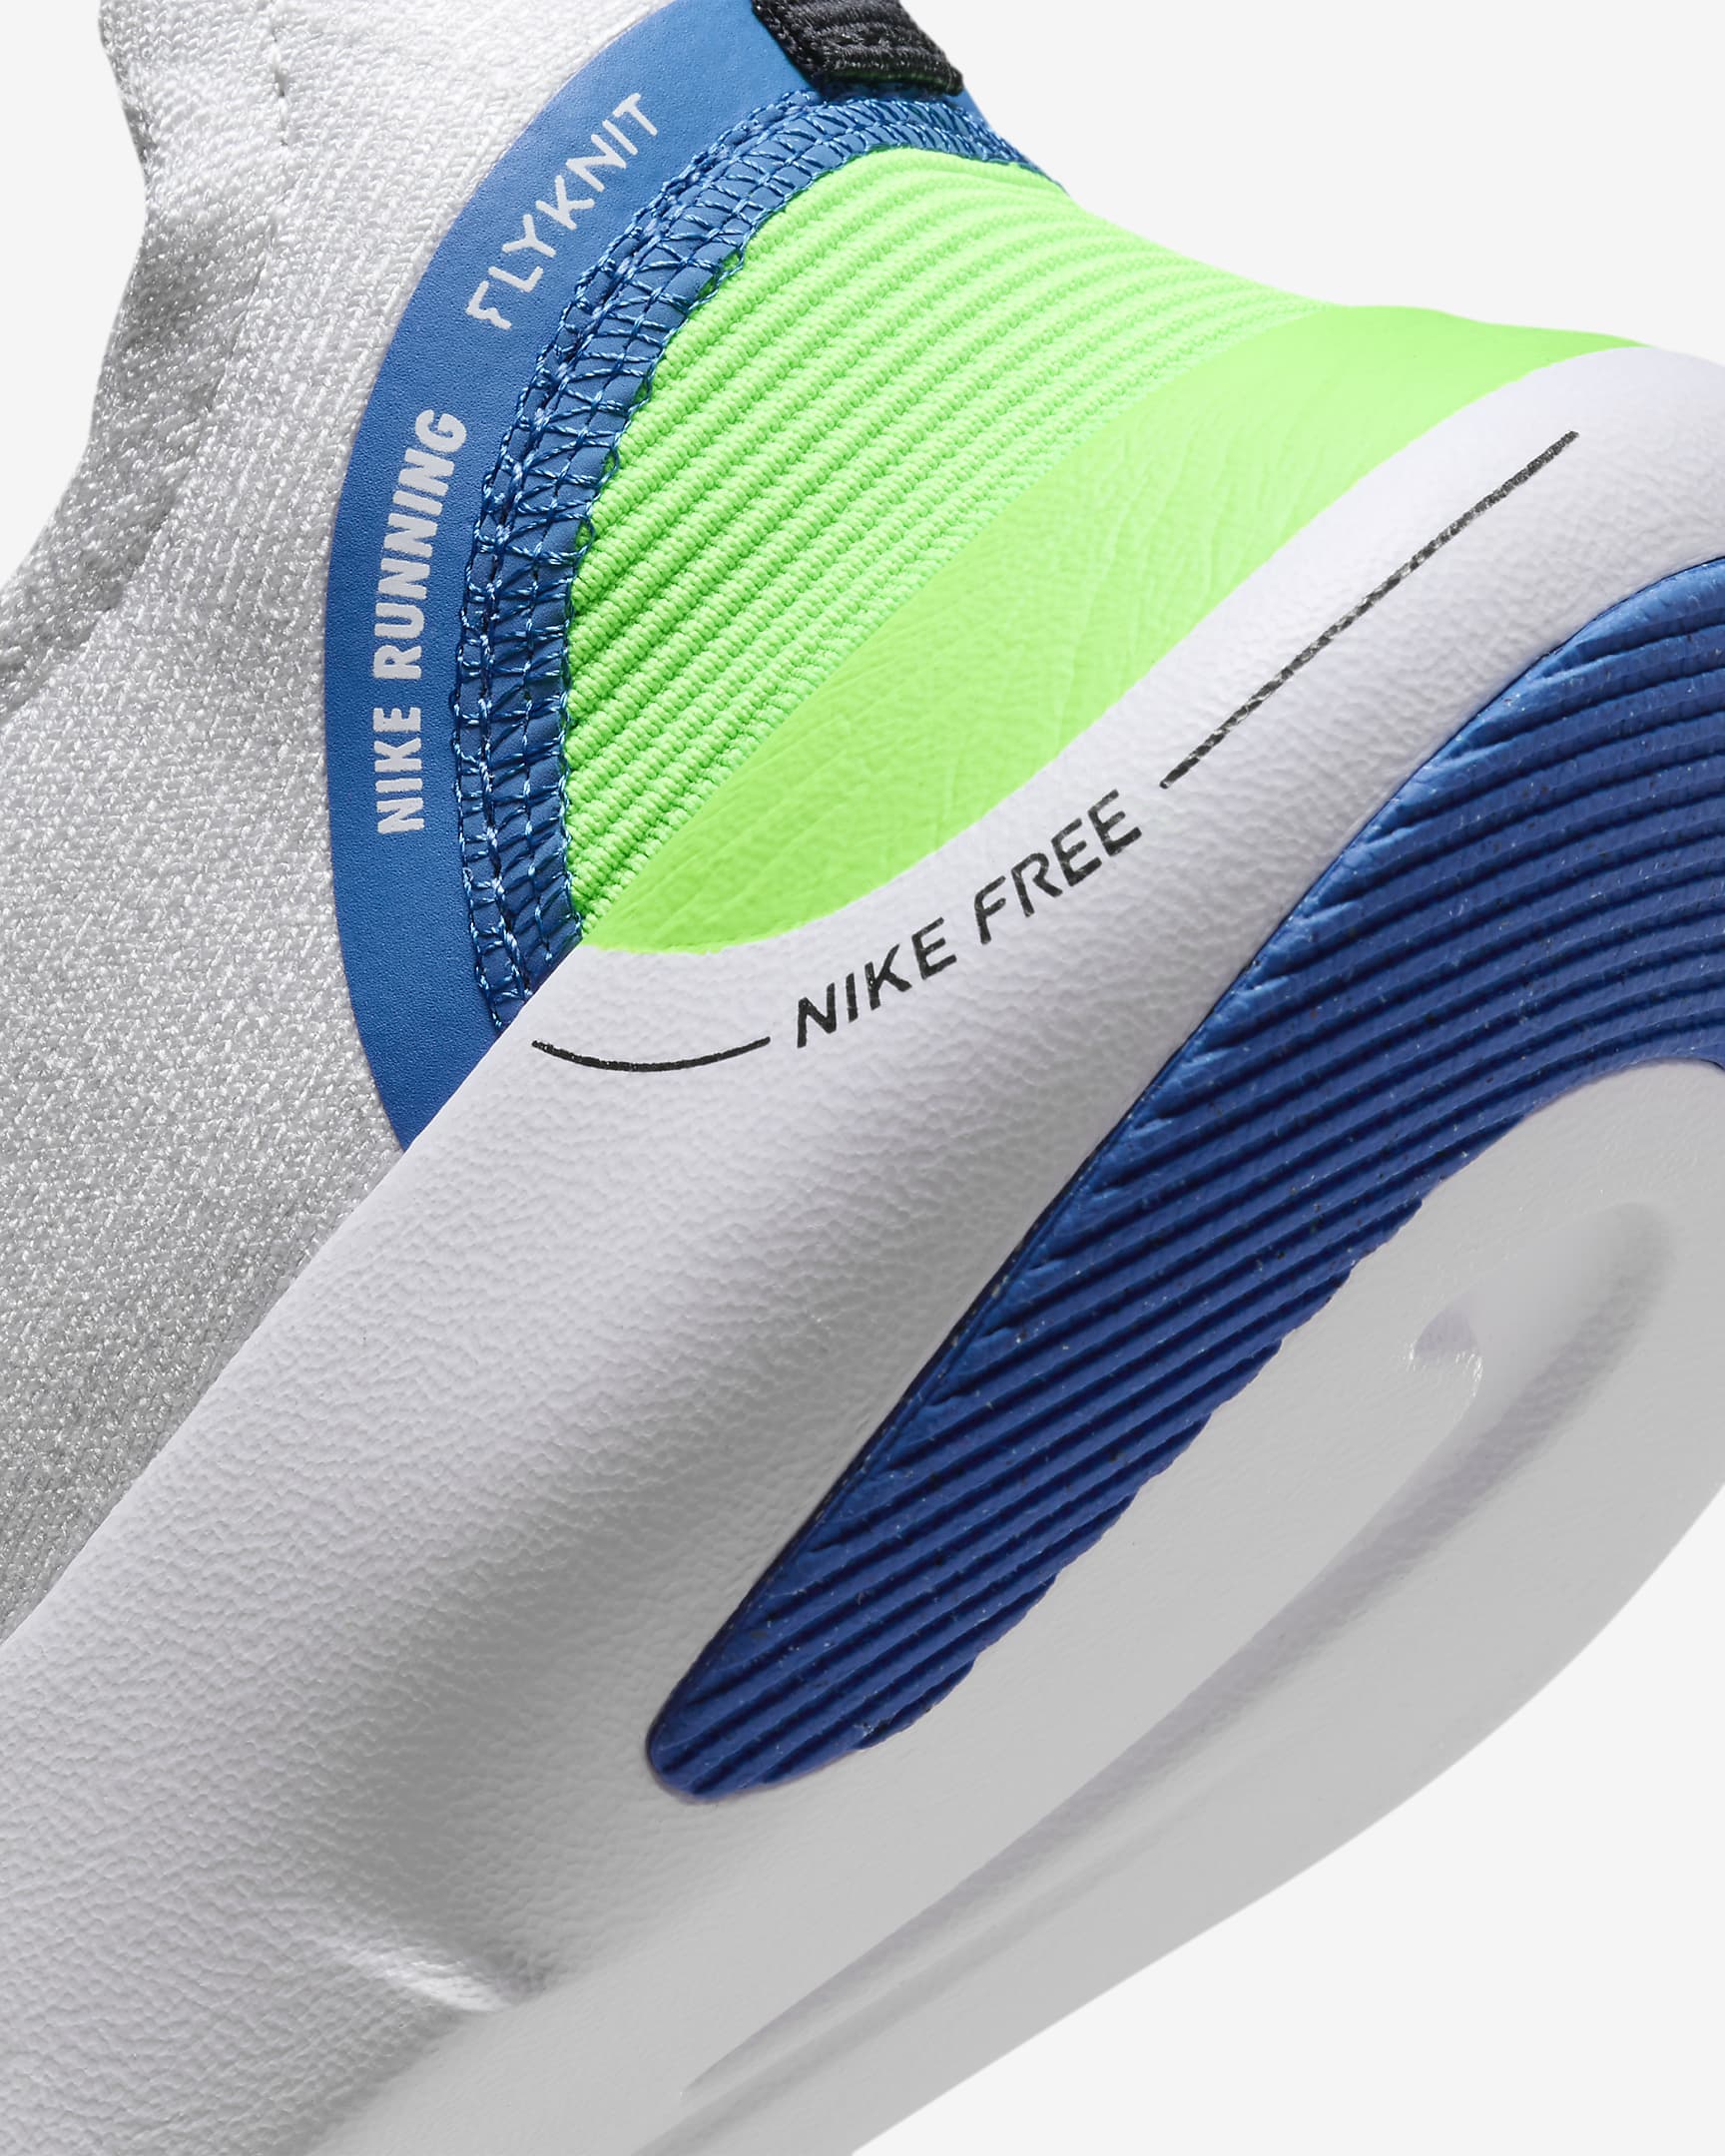 Nike Free RN NN Men's Road Running Shoes - White/Platinum Tint/Star Blue/Black